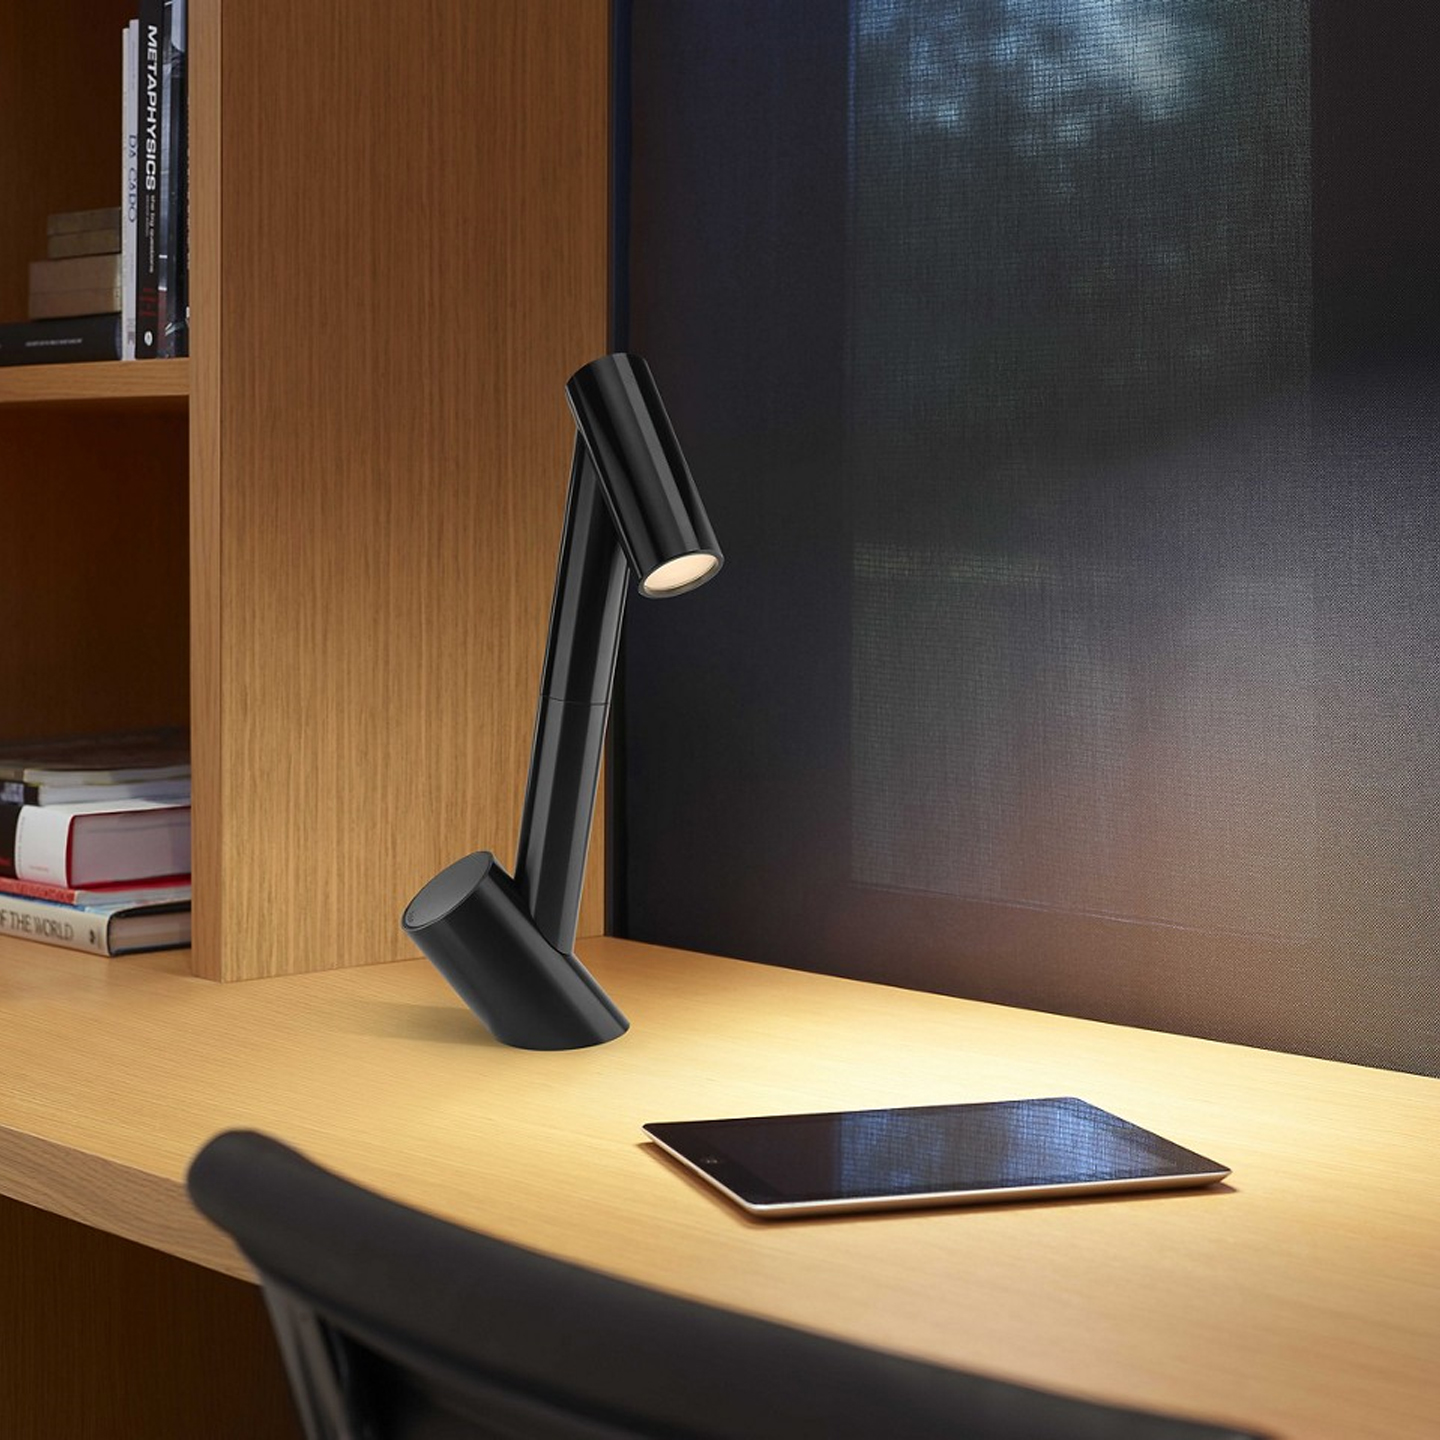 Haworth giraffa lighting in black color on wood office desk with tablet on desk